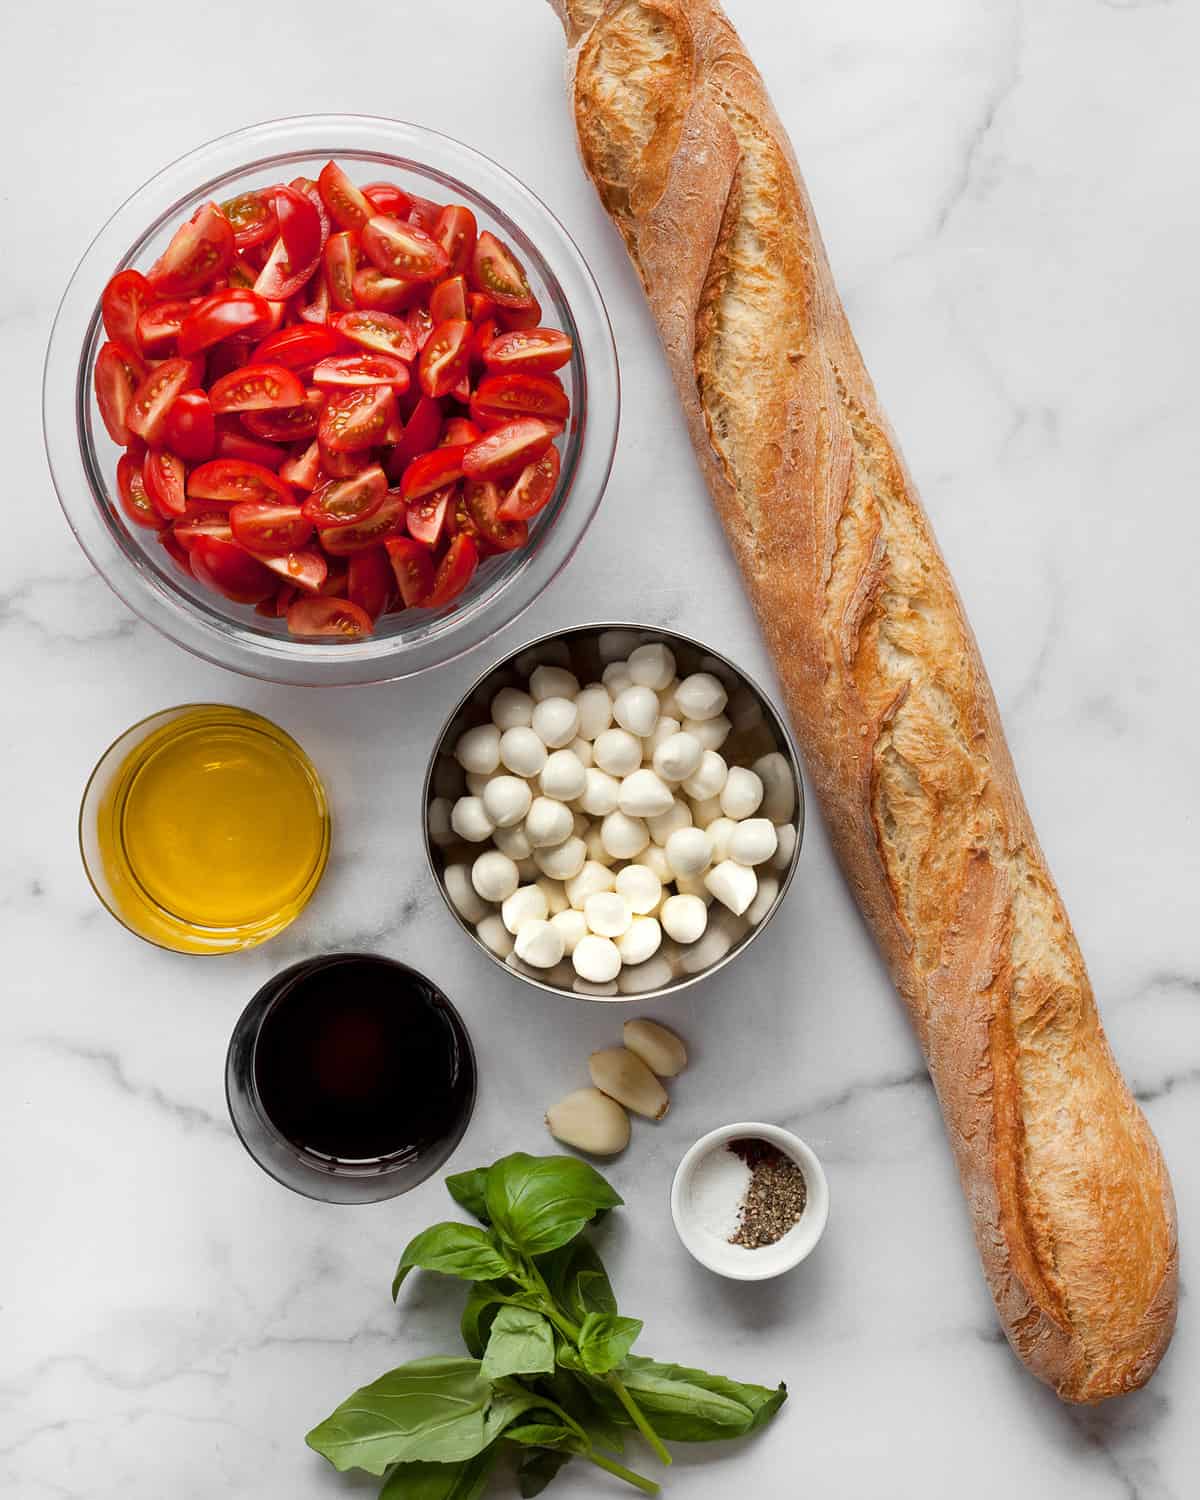 Ingredients including fresh mozzarella, tomatoes, olive oil, vinegar, bread and basil